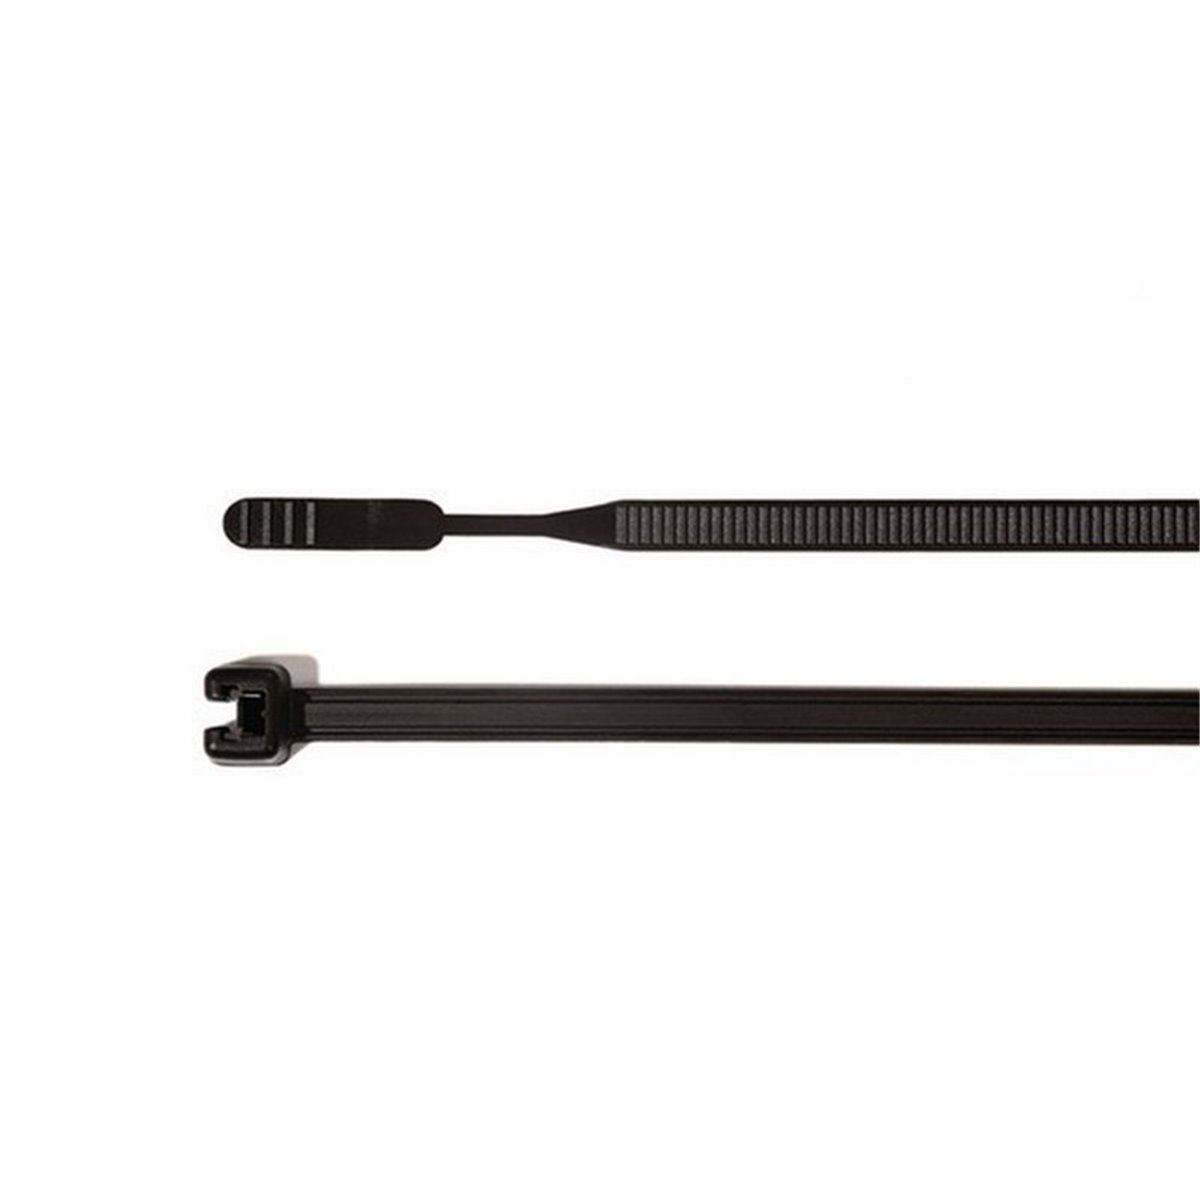 Cable tie 290x7,7mm Q50I-W-BK 100pcs. HellermannTyton